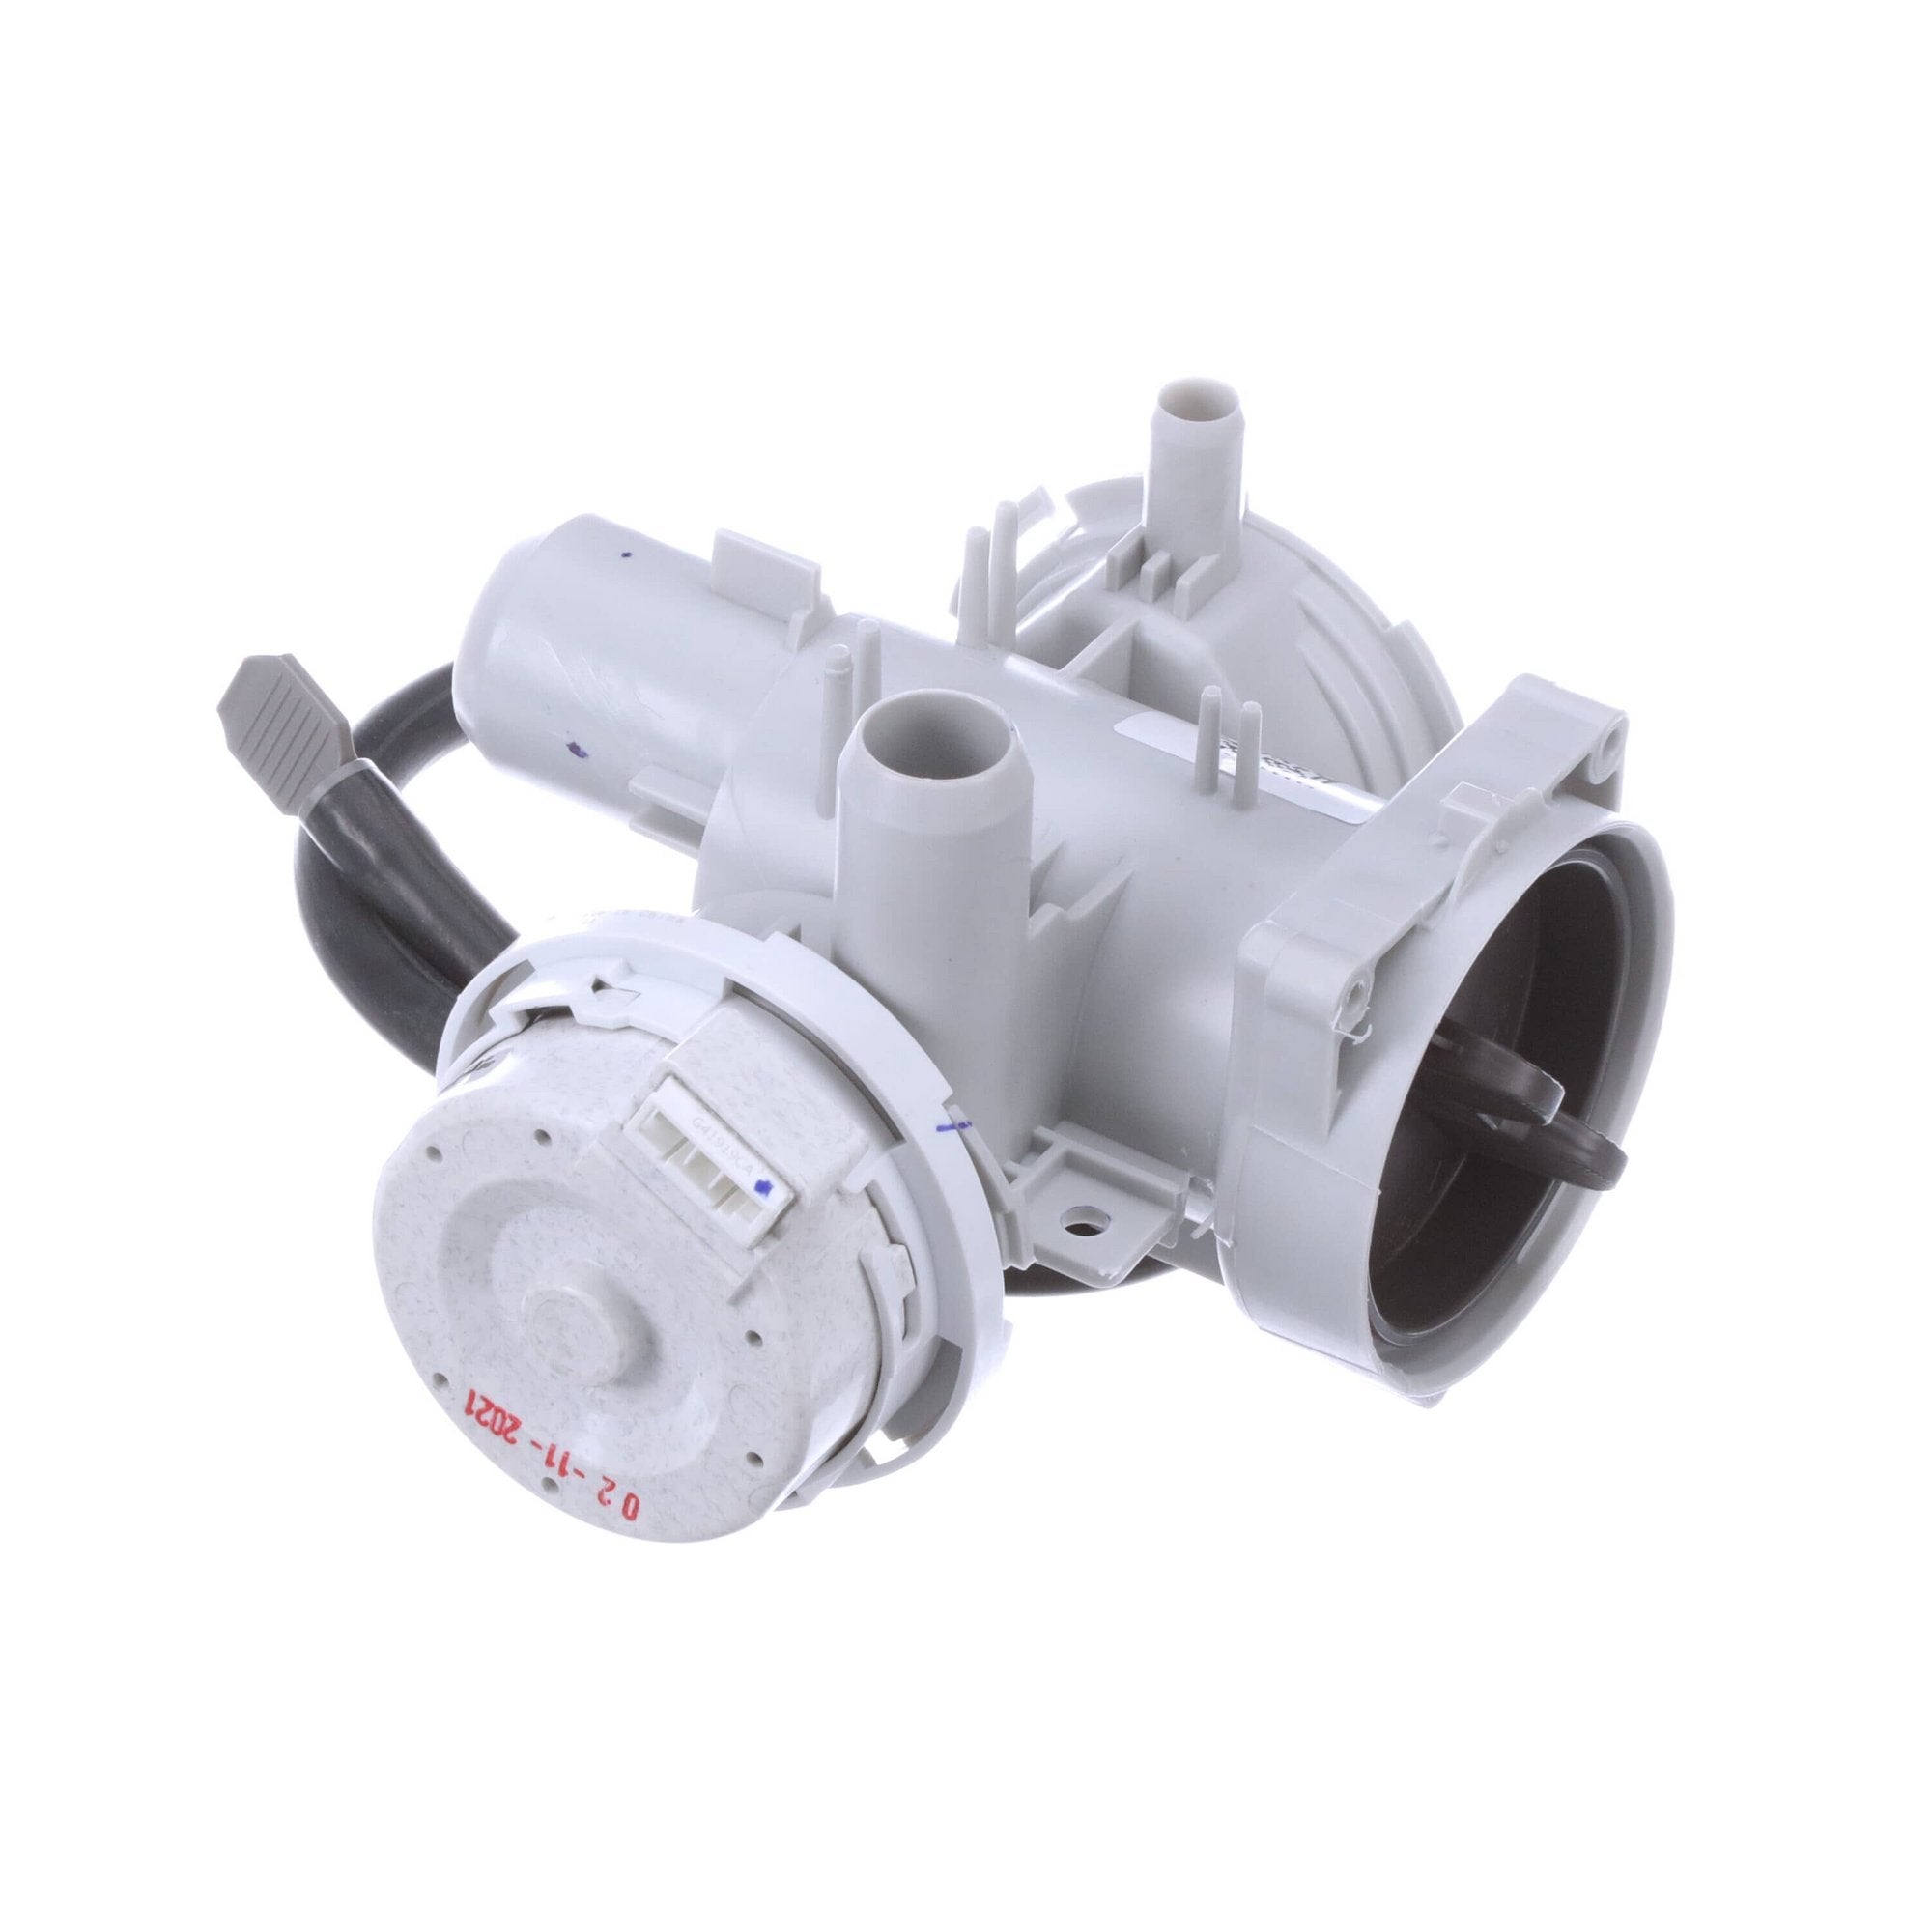 LG Washer Drain Pump Assembly - AHA75693425 New